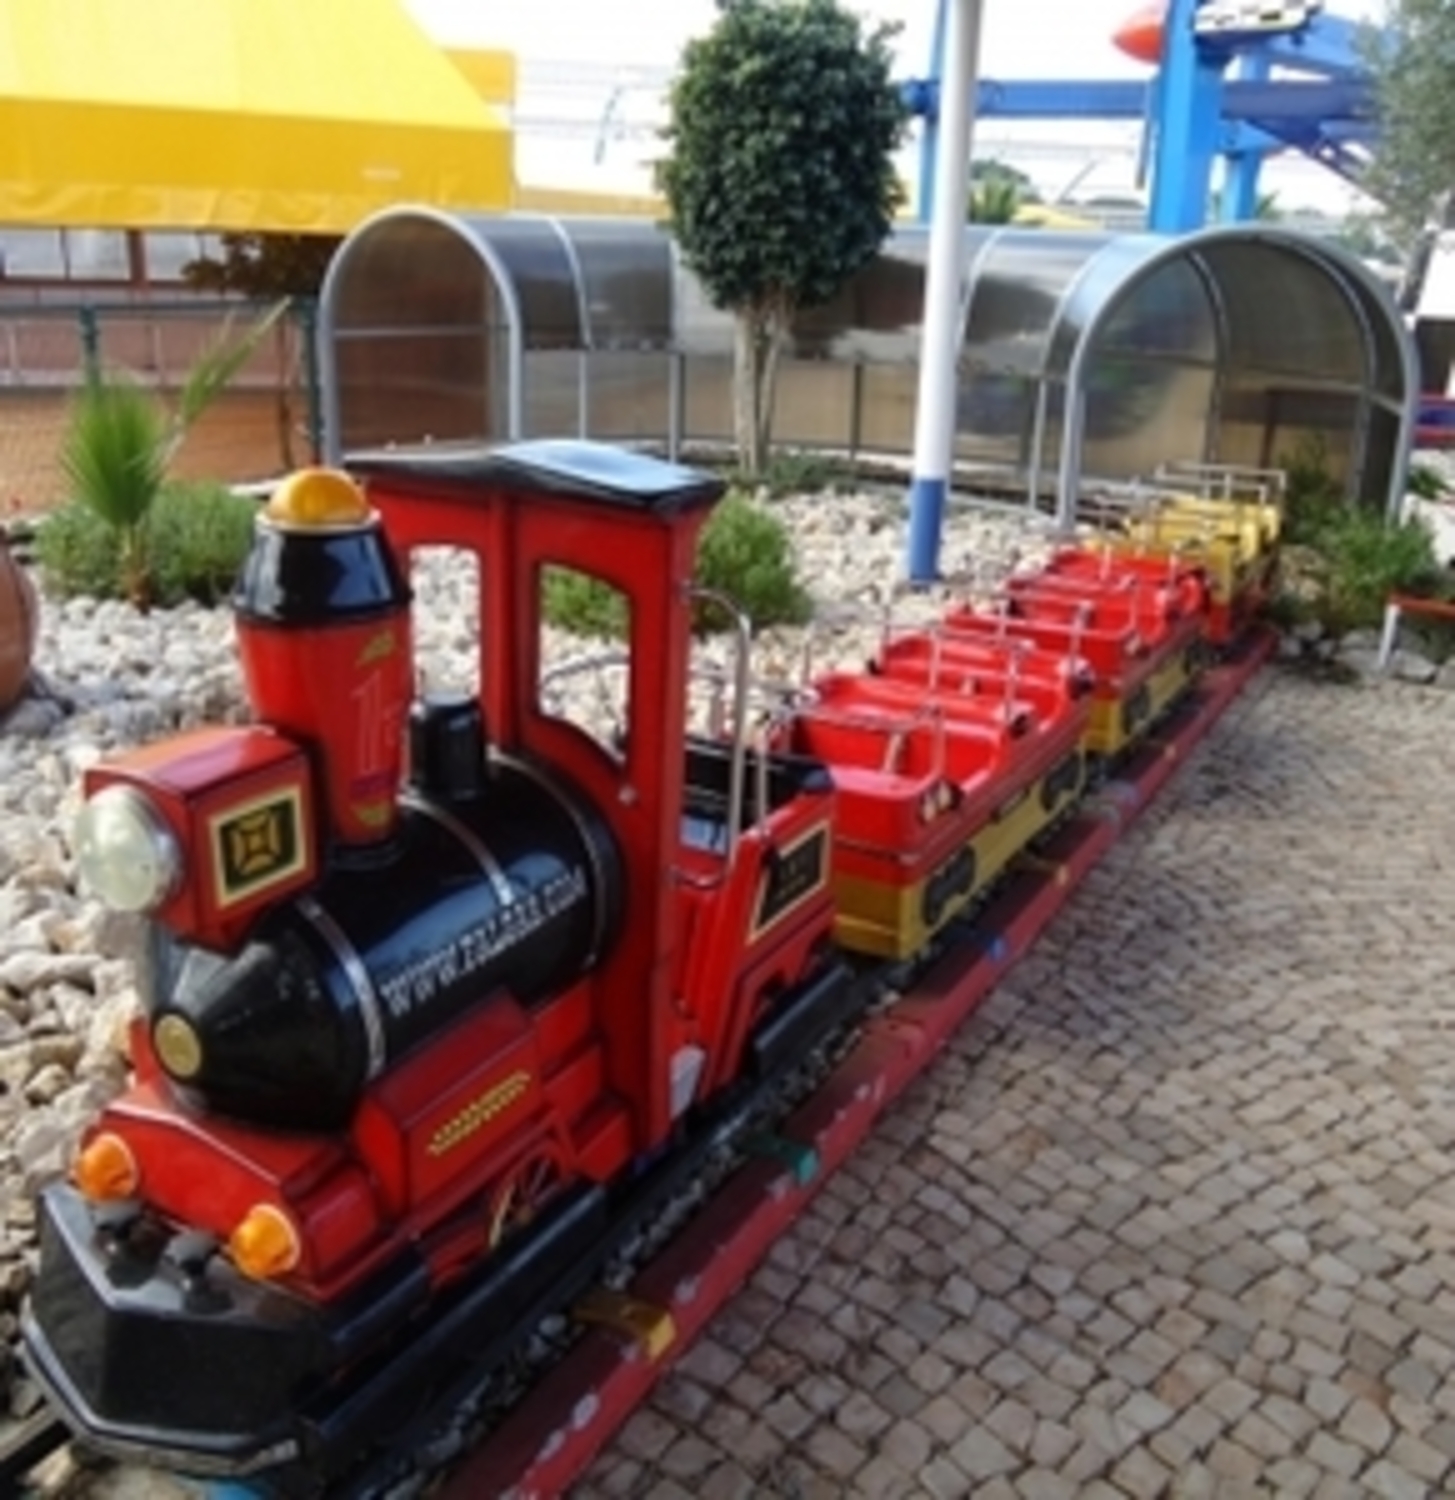 Mini Train